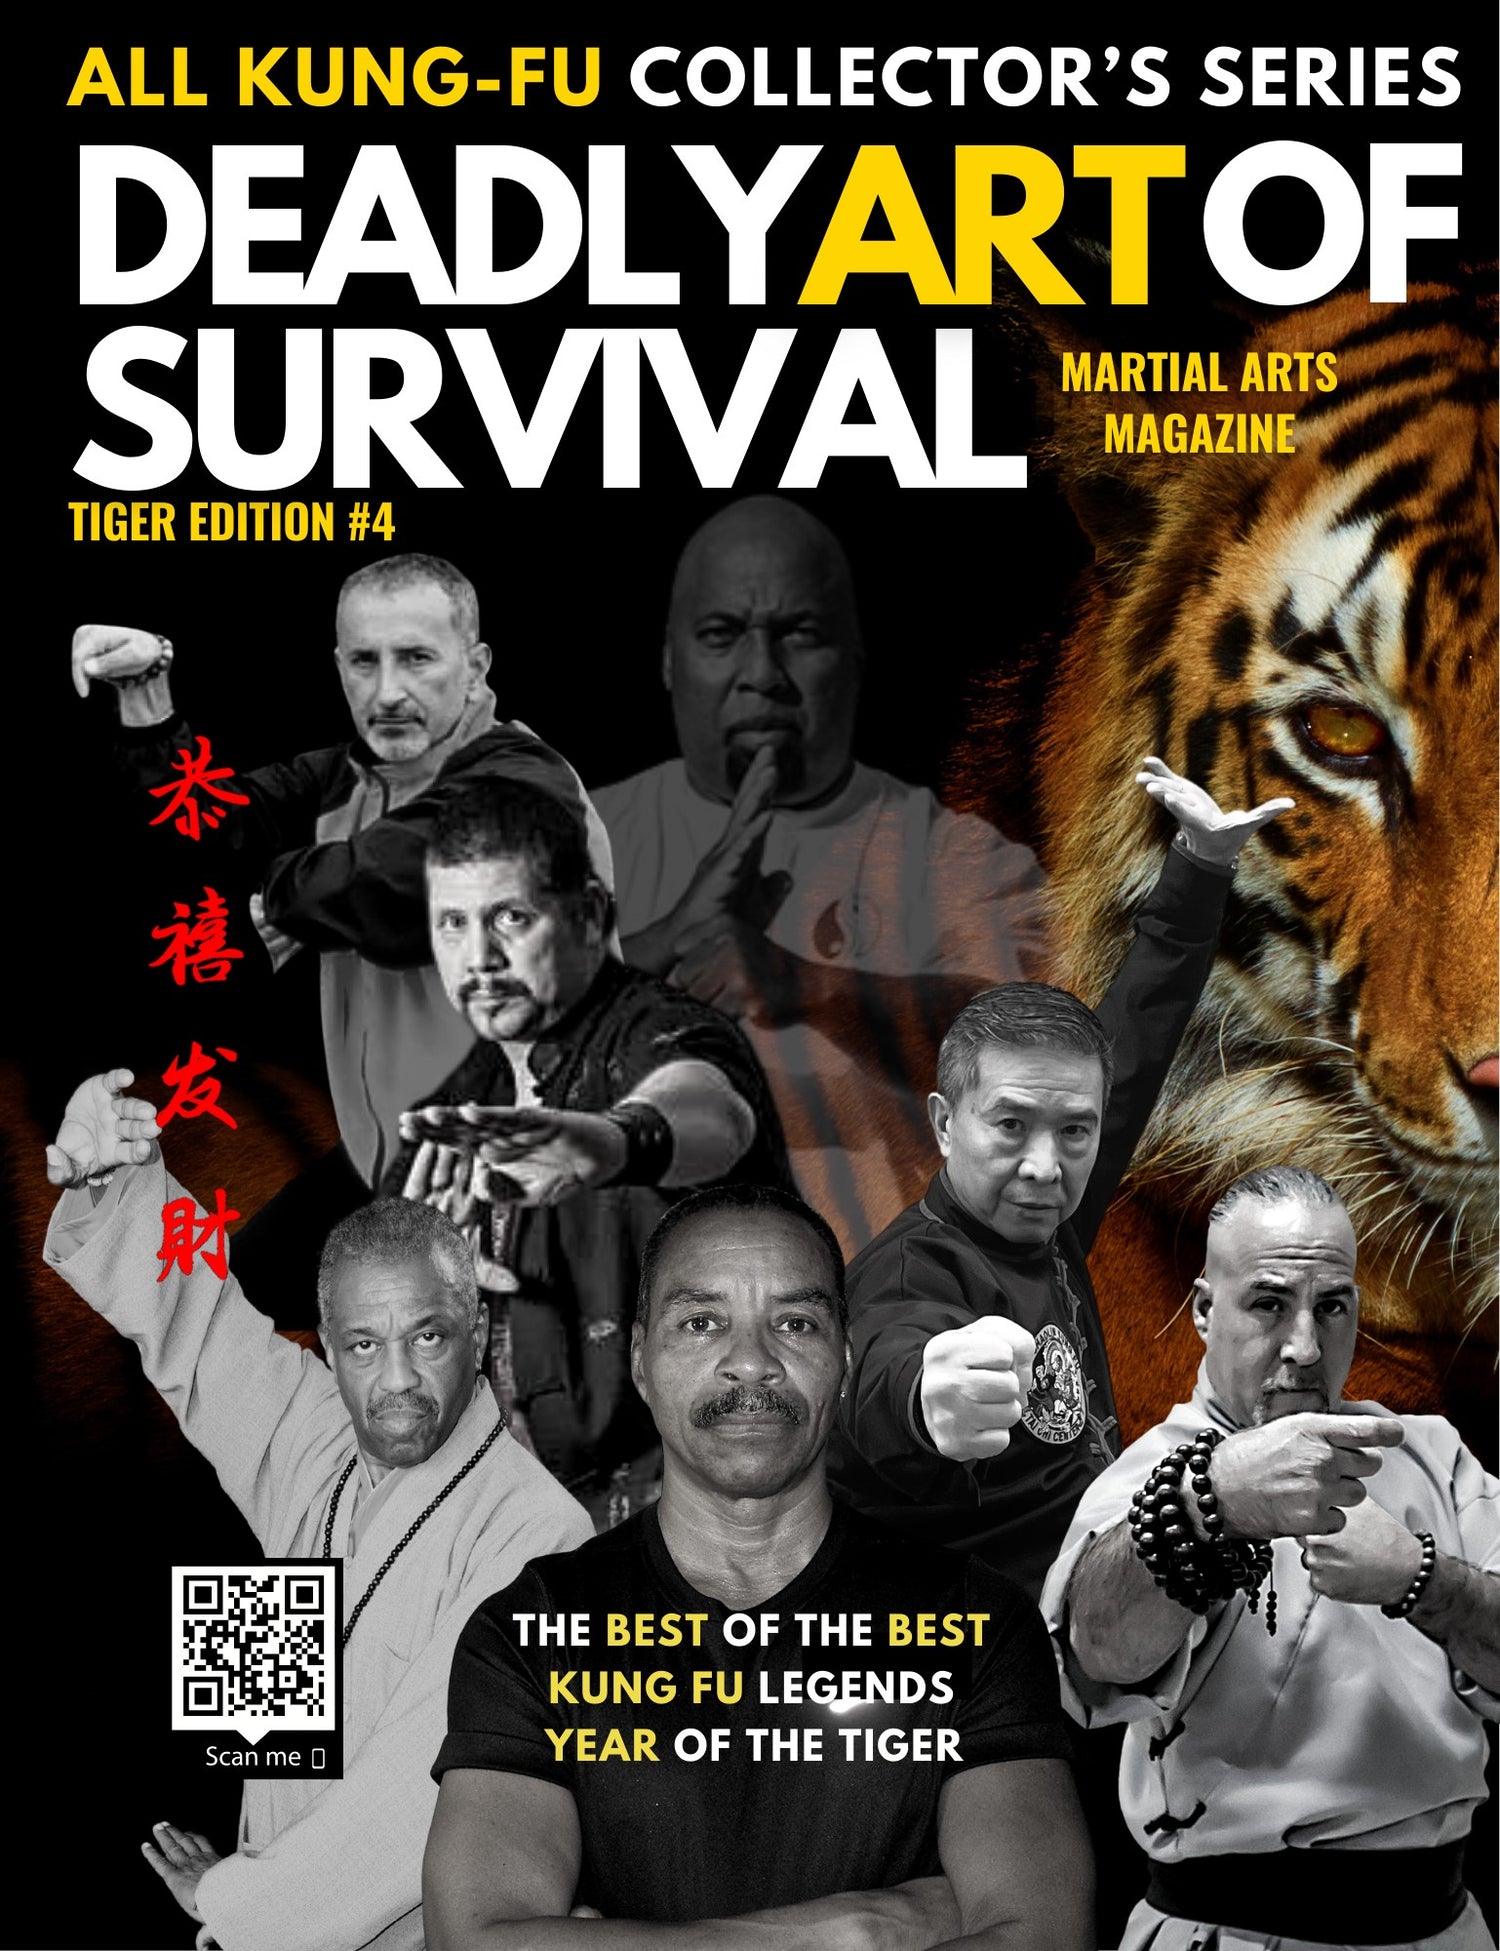 (EBOOK VERSION ONLY) Deadly Art of Survival Magazine Tiger Edition #4: All Kung Fu Collector's Series #1 Martial Arts Magazine deadlyartofsurvival.com